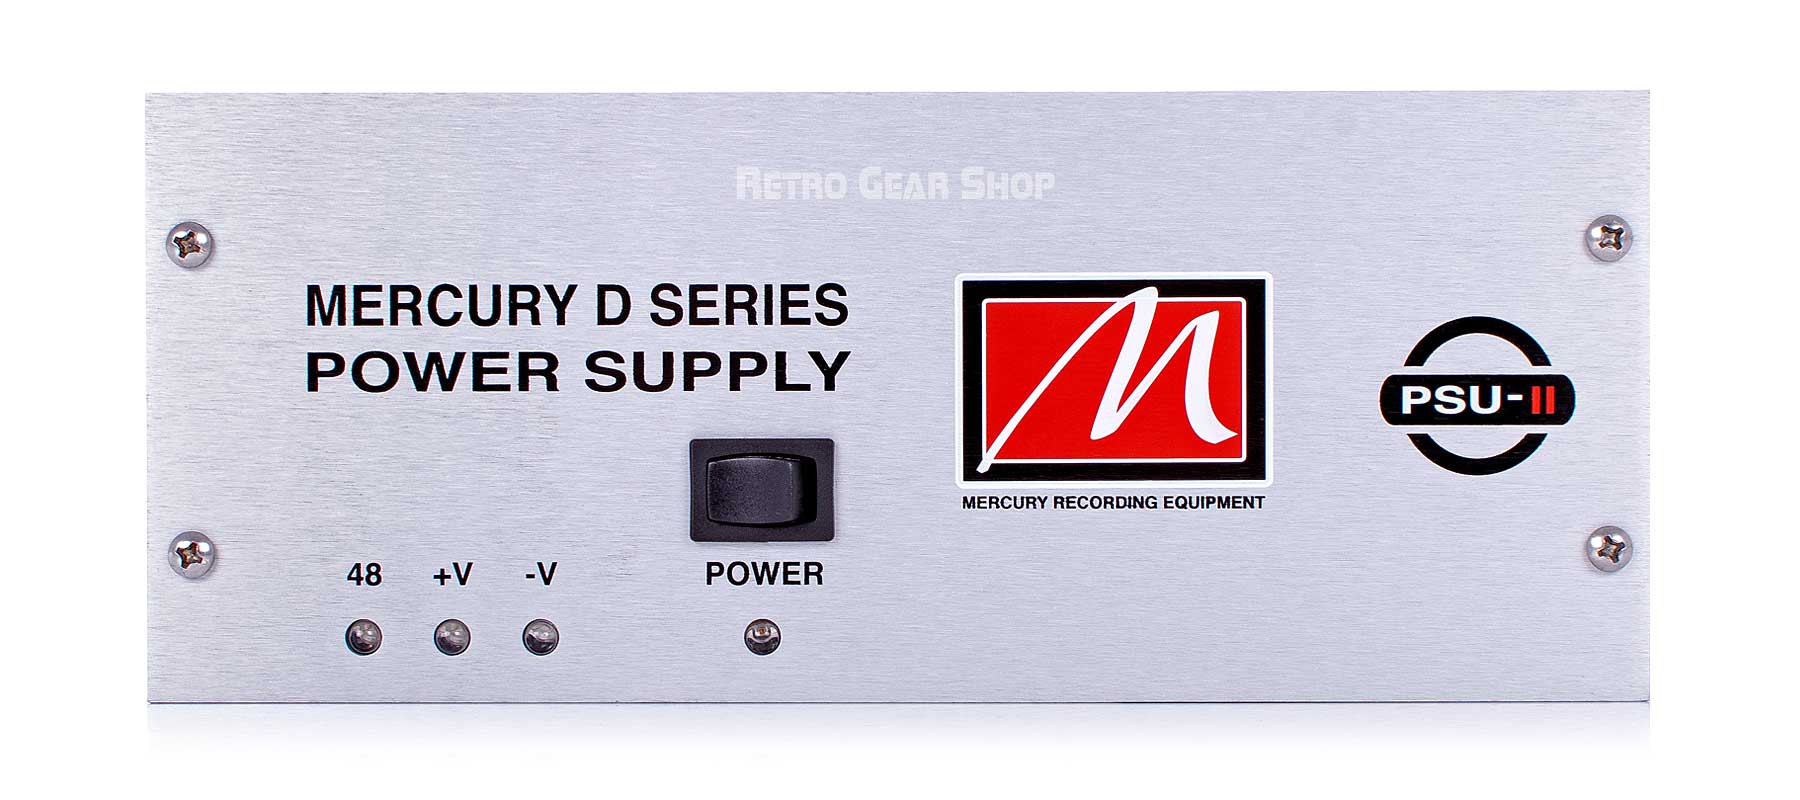 Mercury Recording Equipment 5.2A PSU-II Power Supply Front